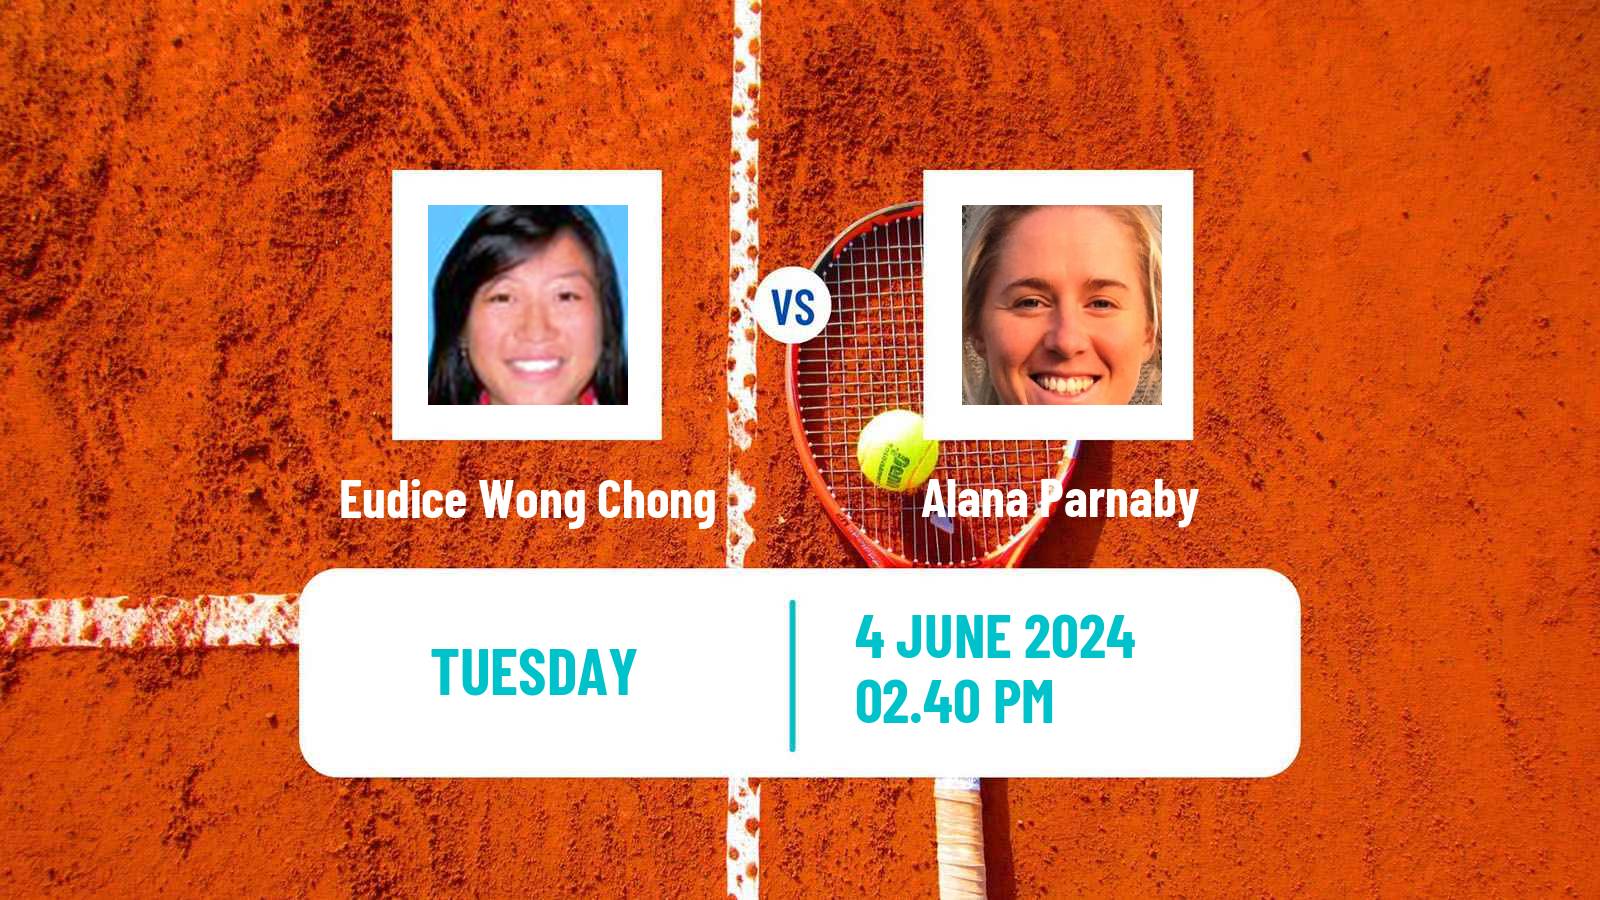 Tennis ITF W50 Montemor O Novo 2 Women Eudice Wong Chong - Alana Parnaby